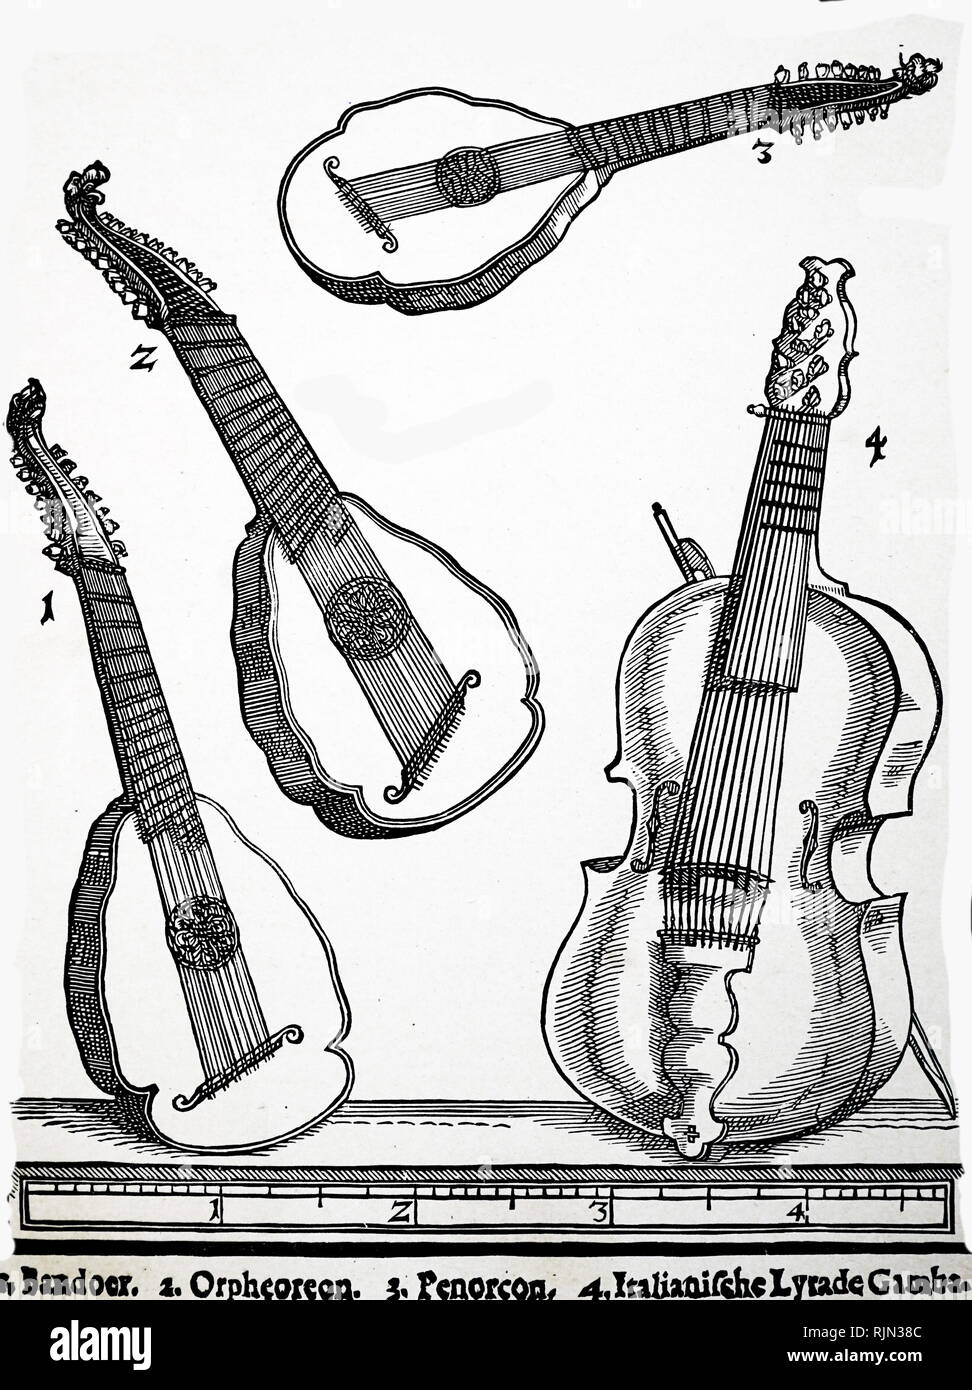 Illustration showing Old stringed instruments 1: Bandoer 2: Orpheoreon 3: Penorcon 4: Italian Lyra da Gamba. From Michael Praetorius 'Syntagma Musicum' Basel 1615-20 Stock Photo